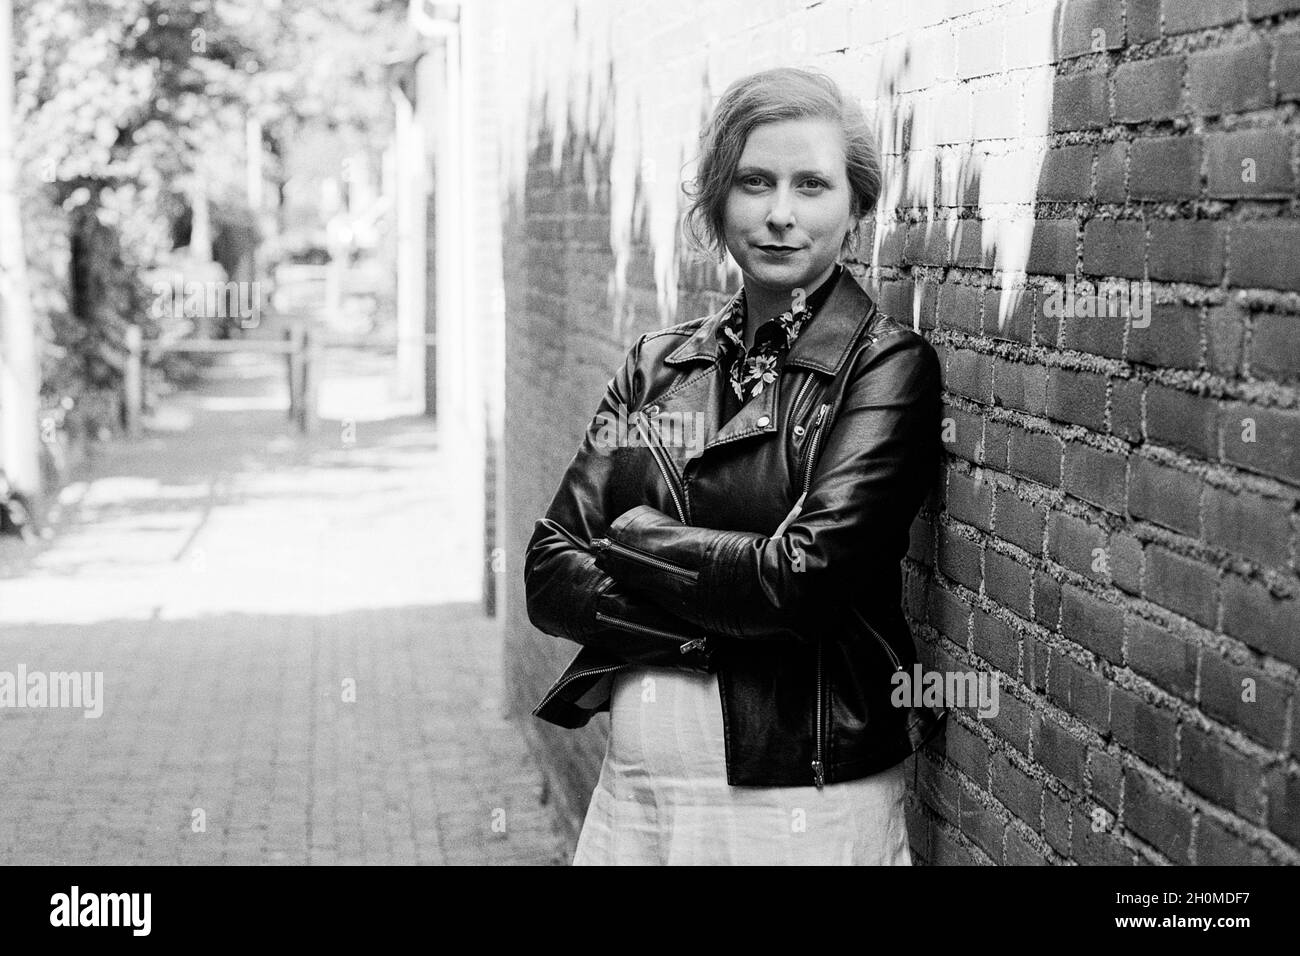 Tilburg, Netherlands. Portrait of a adult, caucasian, blonde woman strolling through down town neigborhoods. Stock Photo